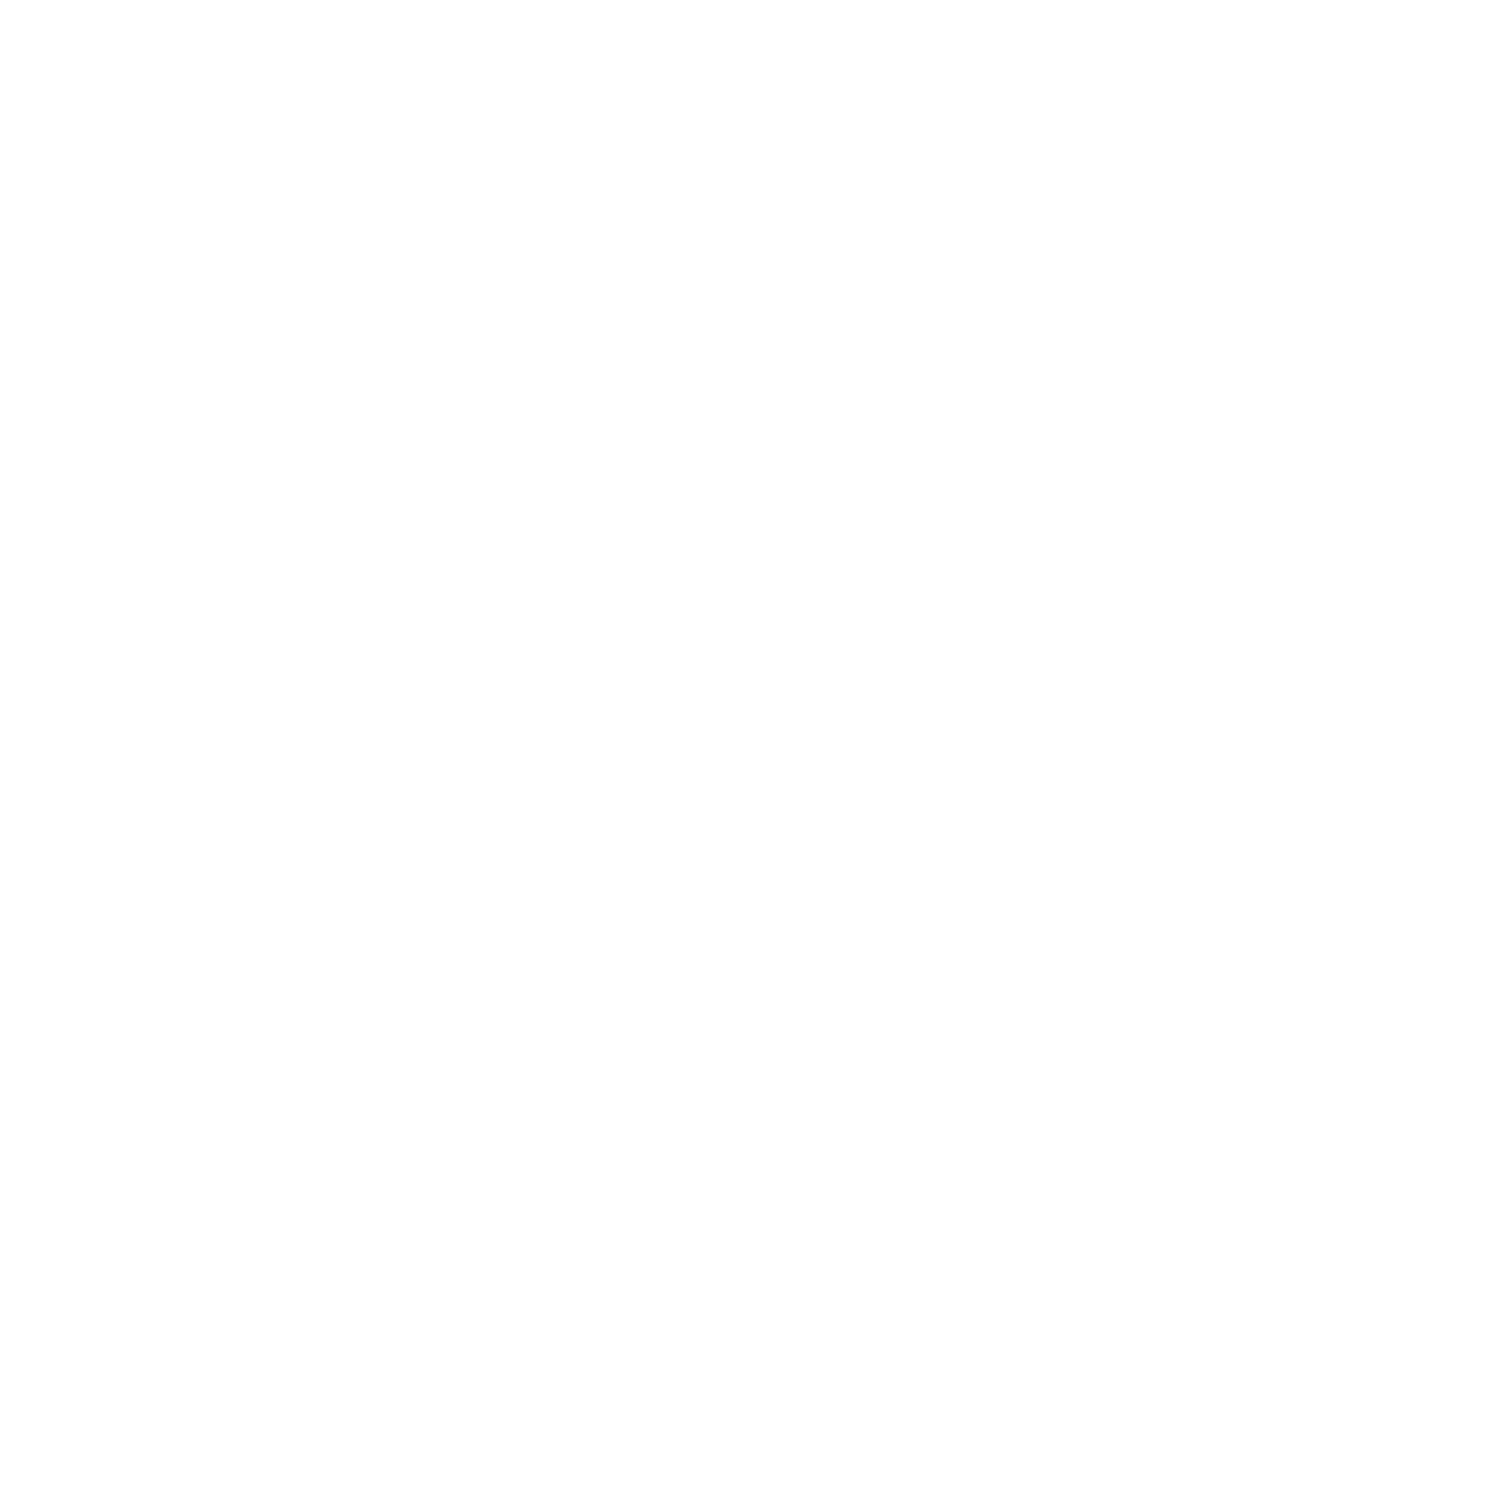 SHEEVART DESIGNS